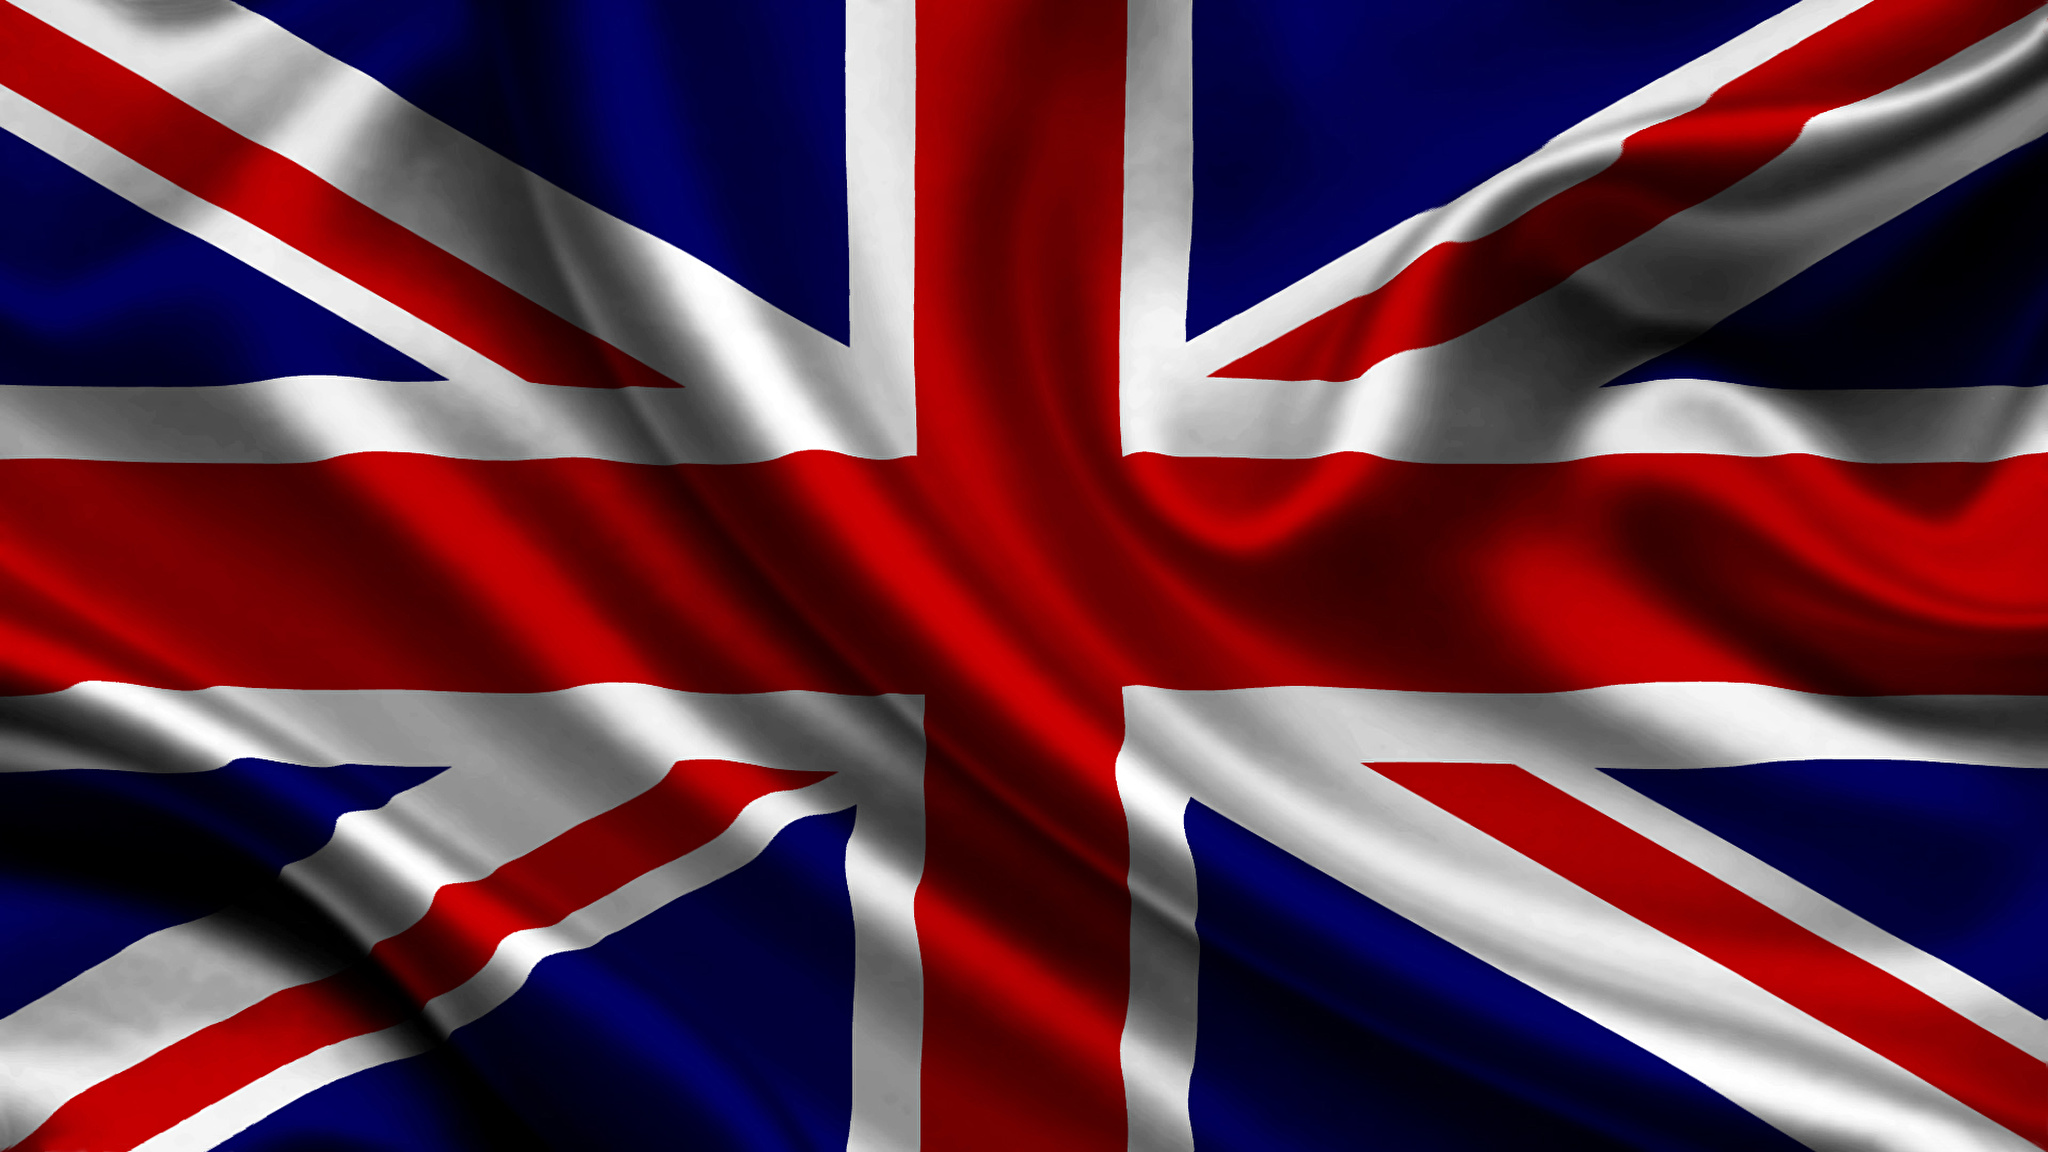 X uk. Юнион Джек флаг Великобритании. Великобритания и Юнайтед кингдом. Флаг Юнайтед кингдом. Соединённое королевство Великобритании флаг.